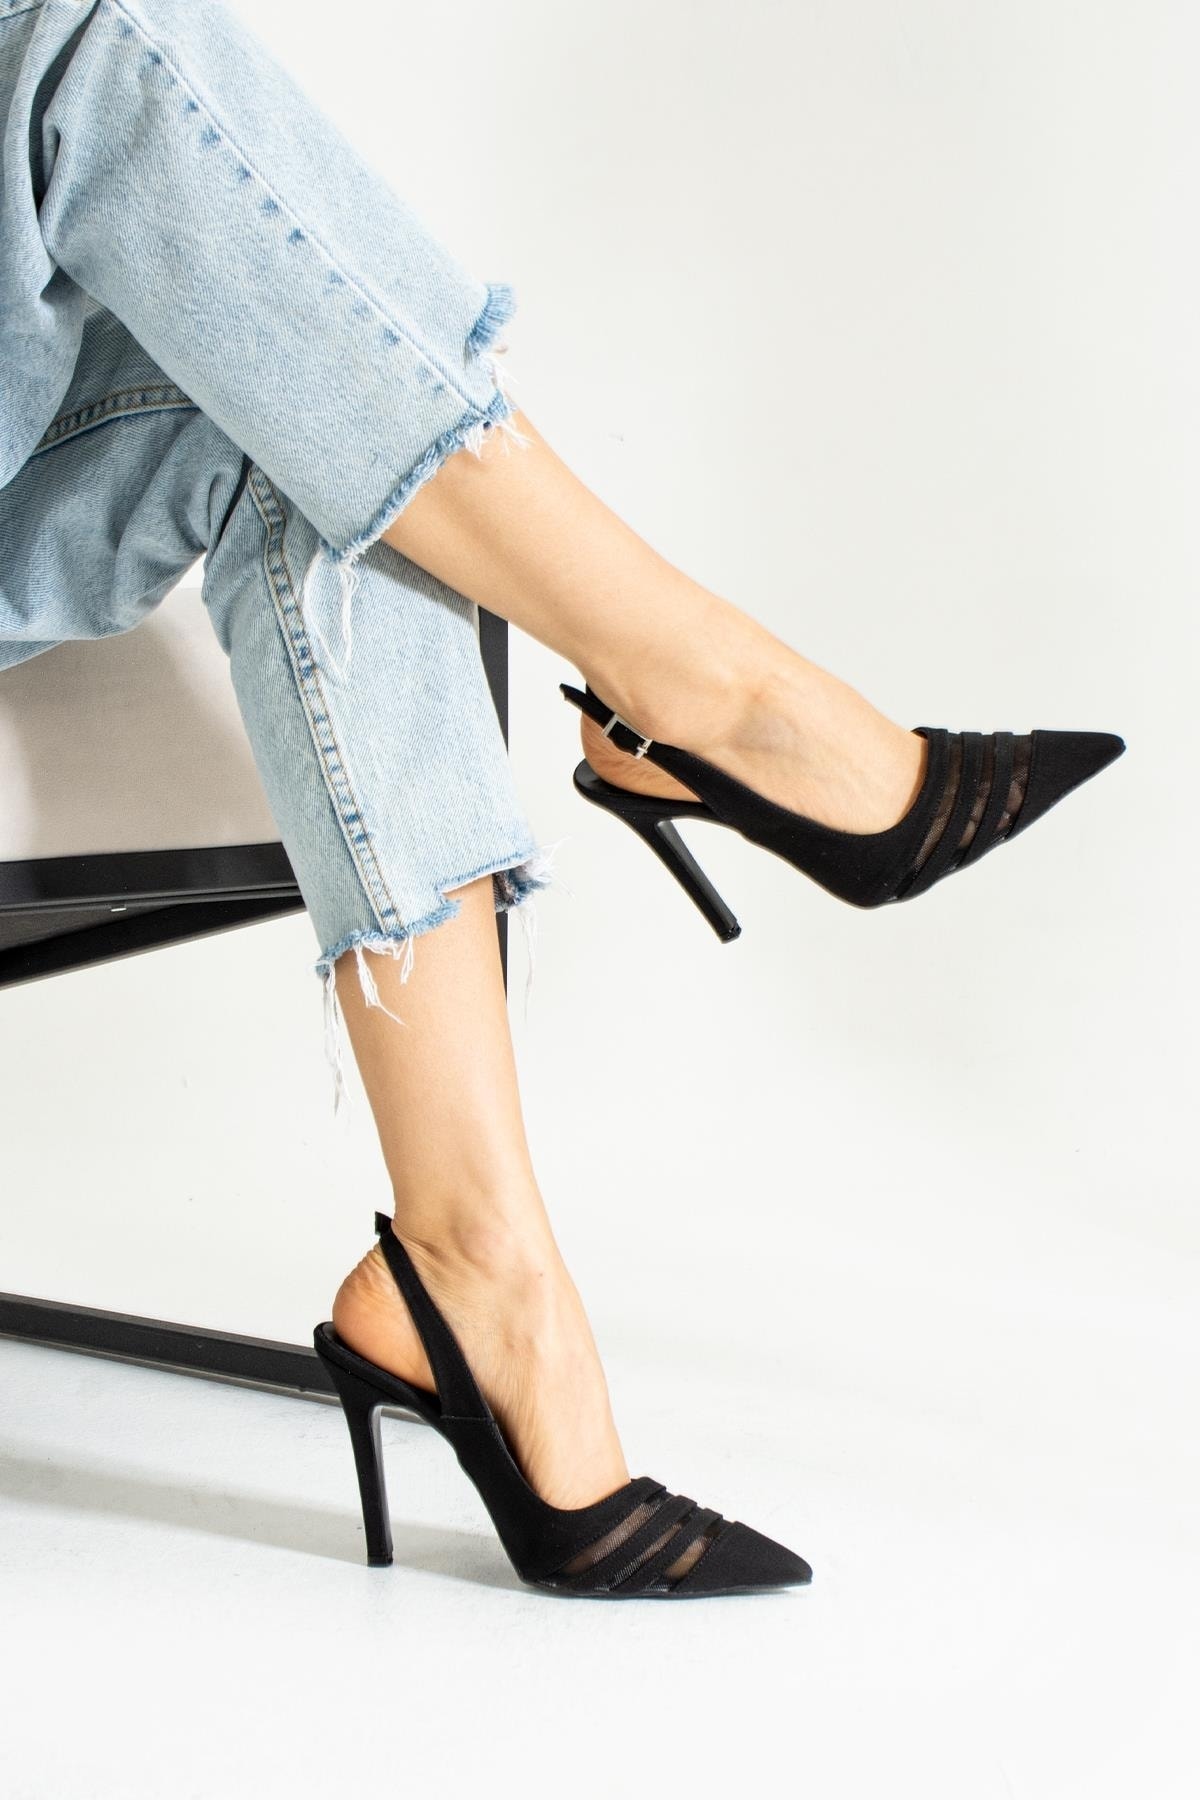 MissPapatya Lara Siyah Saten Kadın Topuklu Ayakkabı